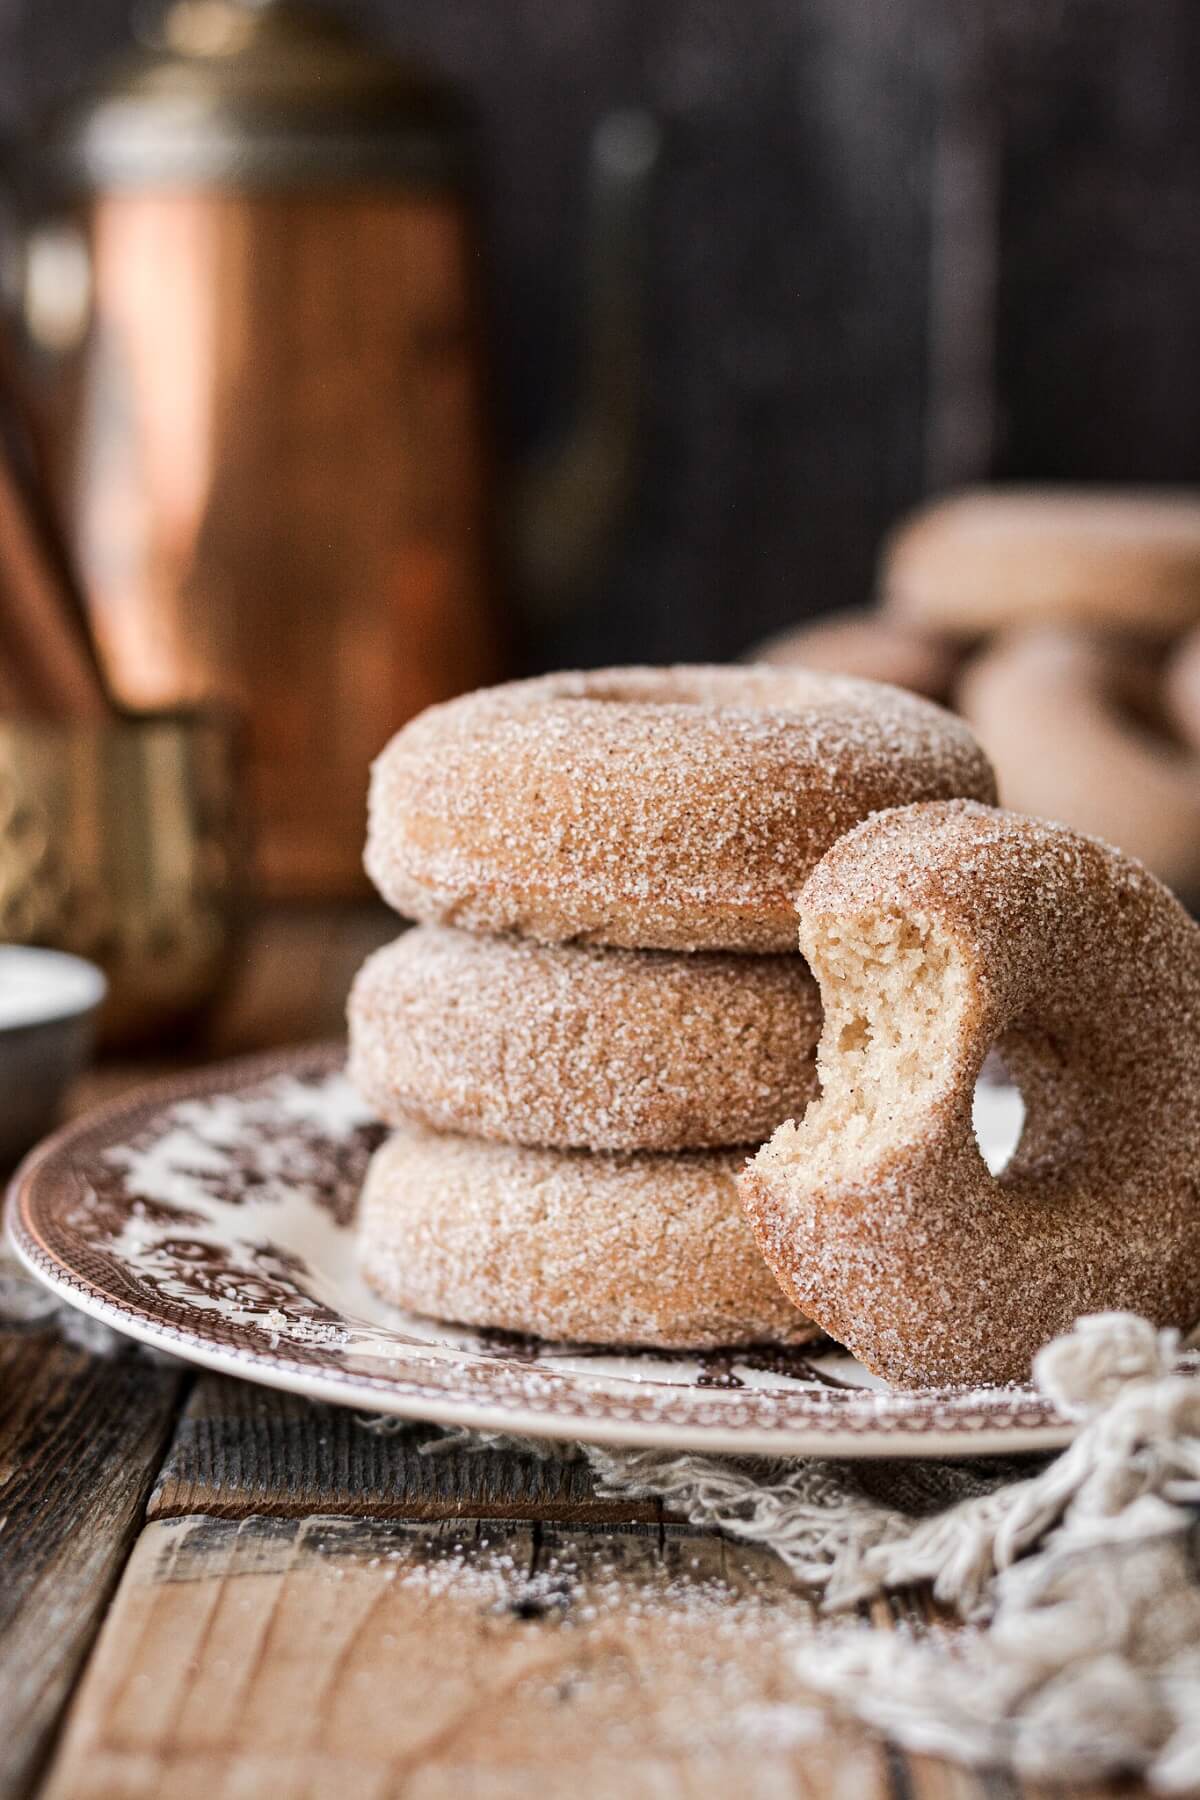 A plate of cinnamon sugar donuts.